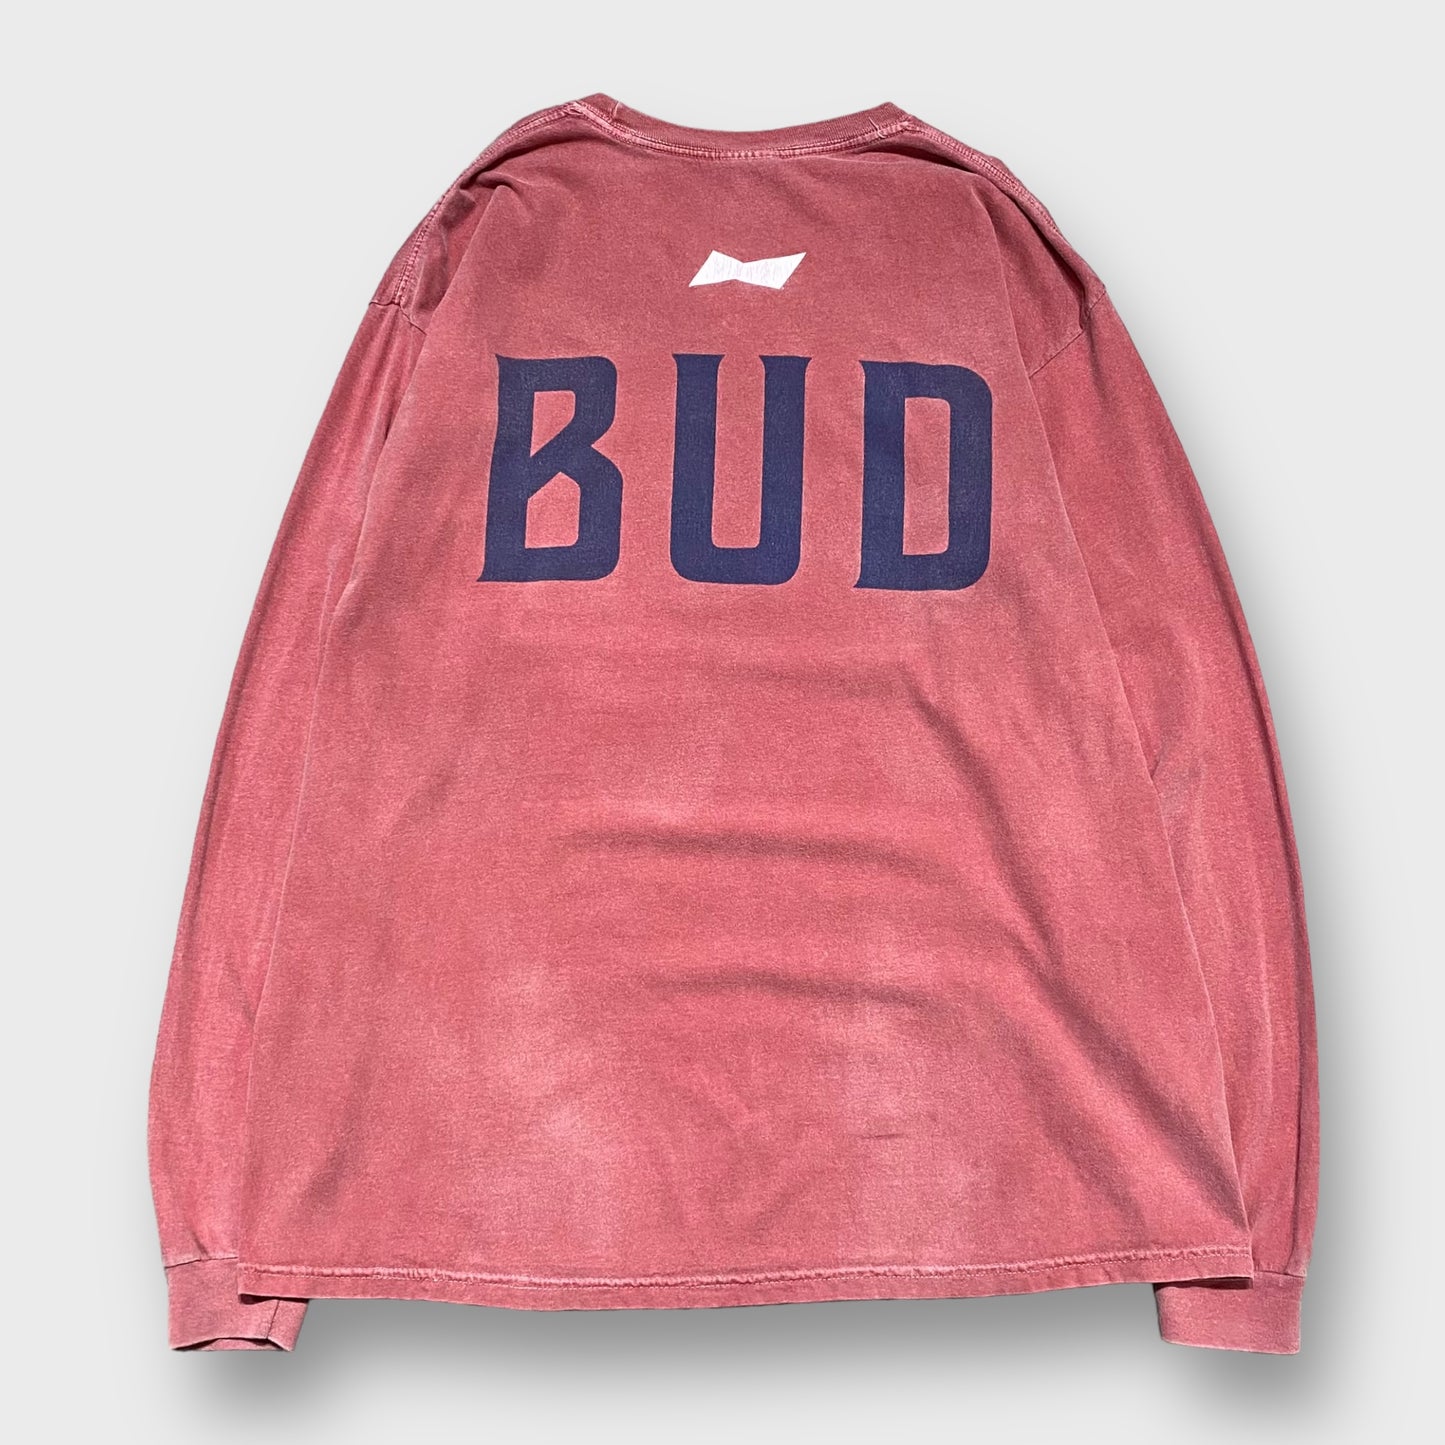 00's "comfort colors" Budweiser company l/s t-shirt